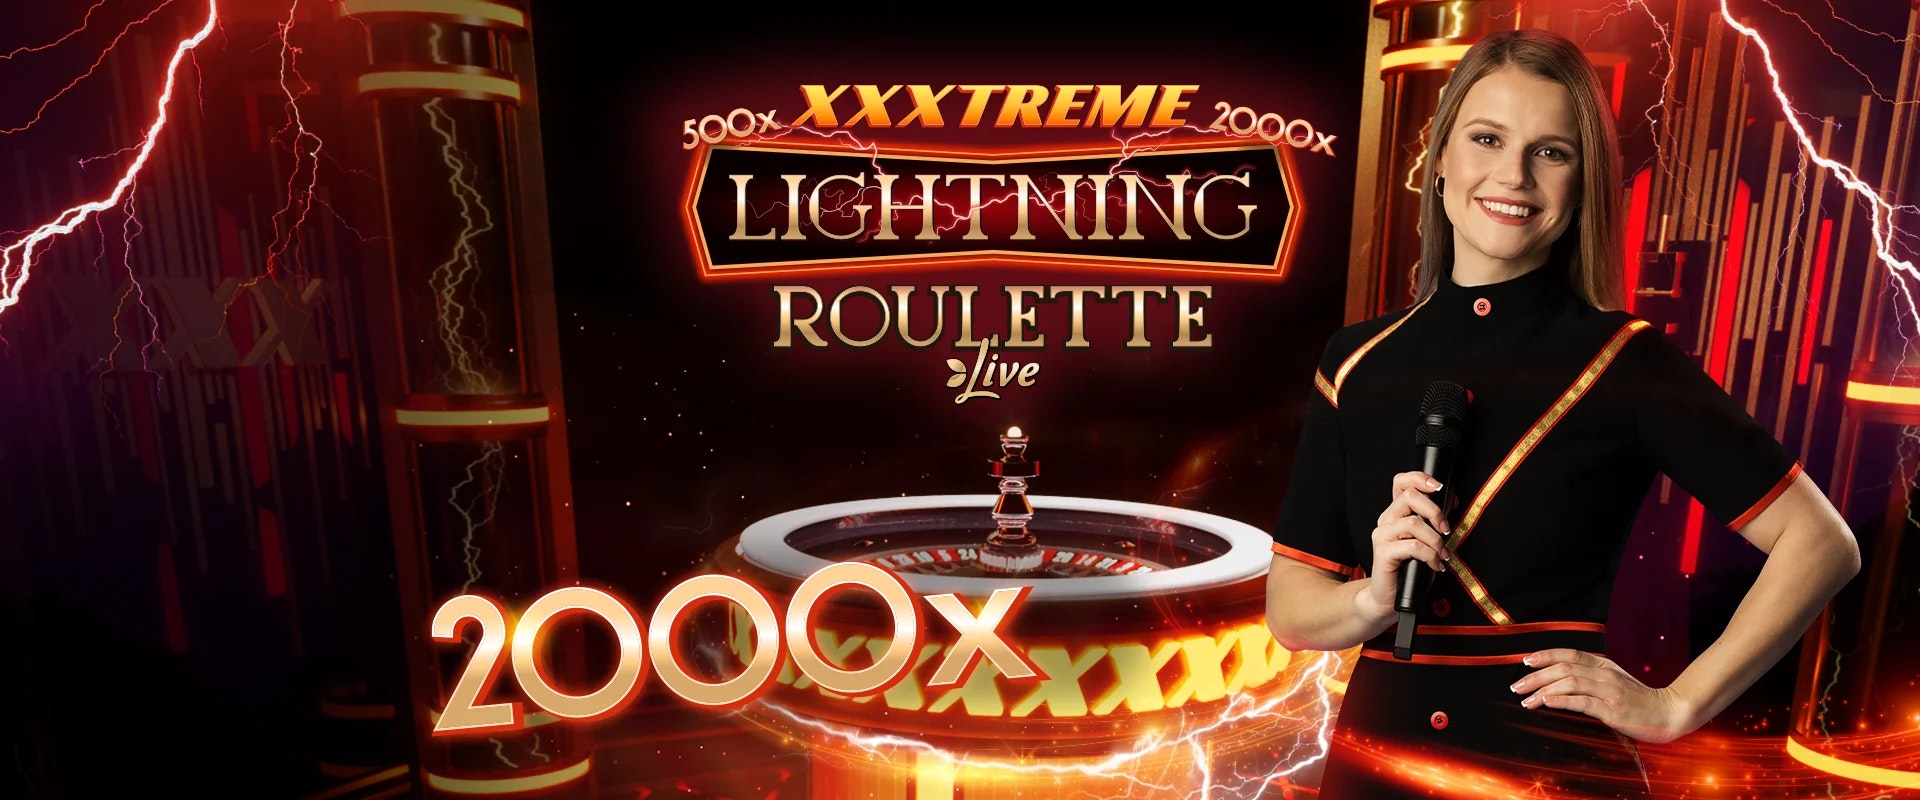 Jogo de cassino ao vivo XXXtreme Lightning Roulette Online